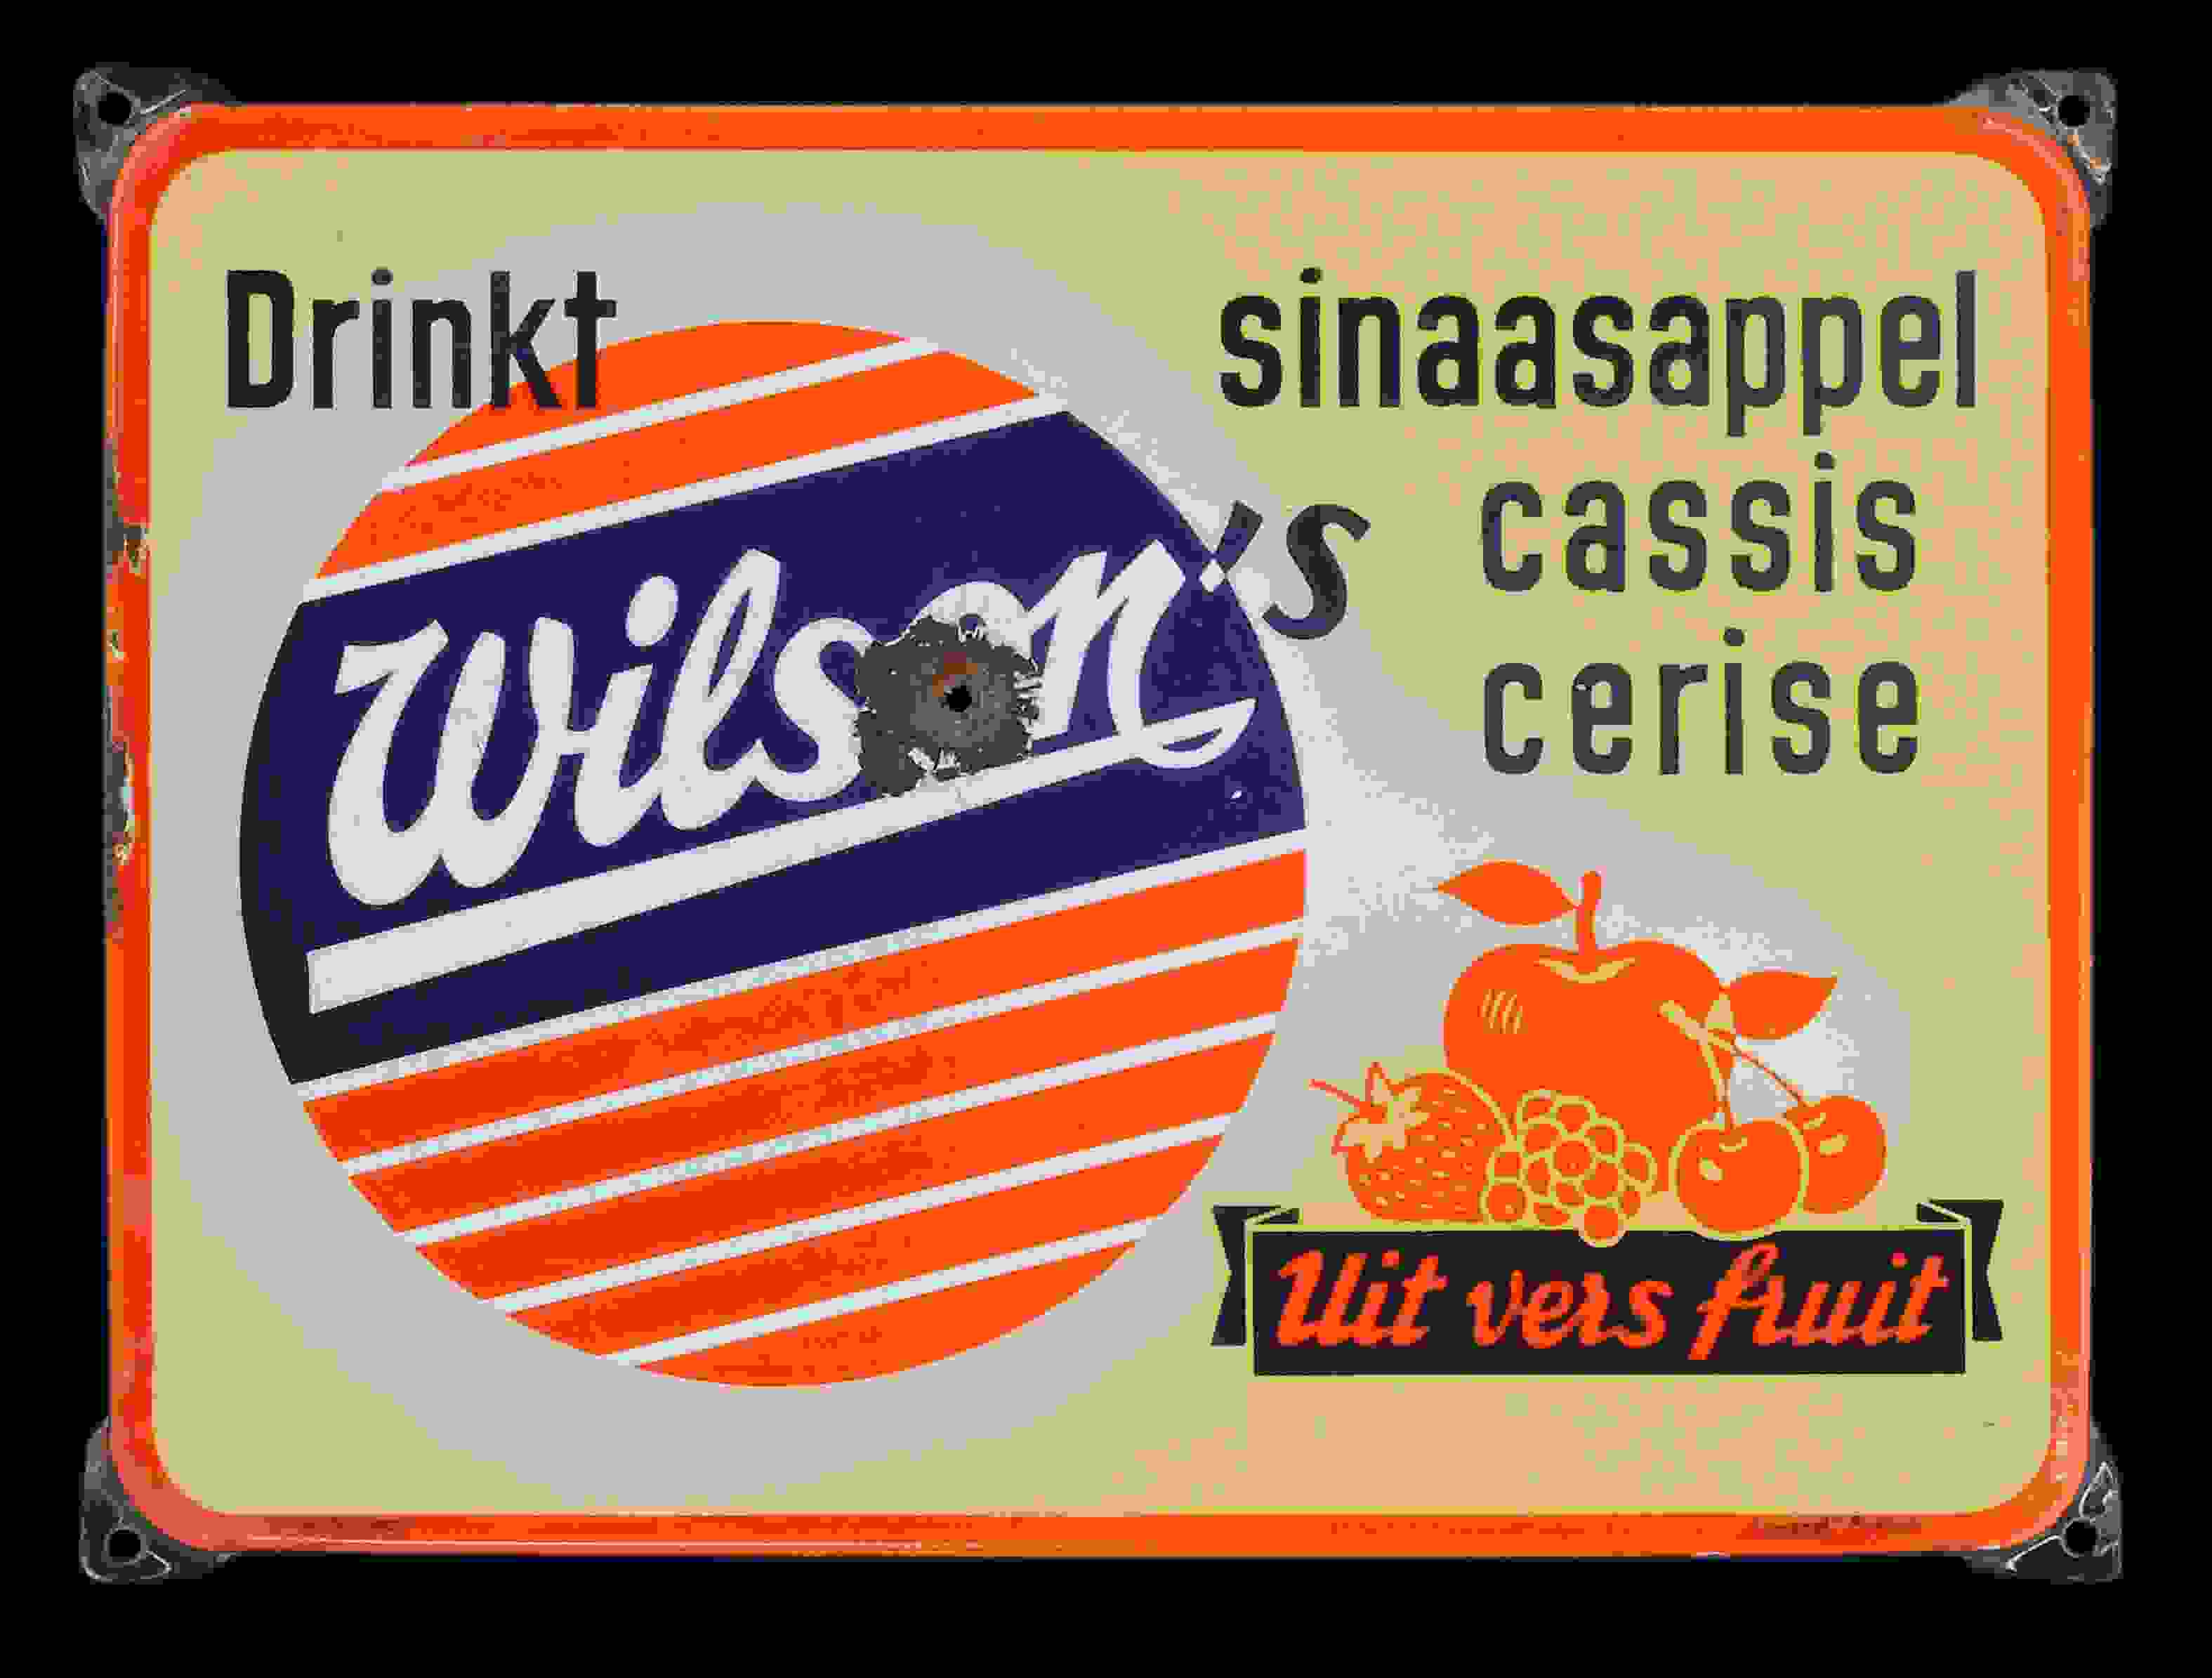 Wilson's sinaasappel cassis 